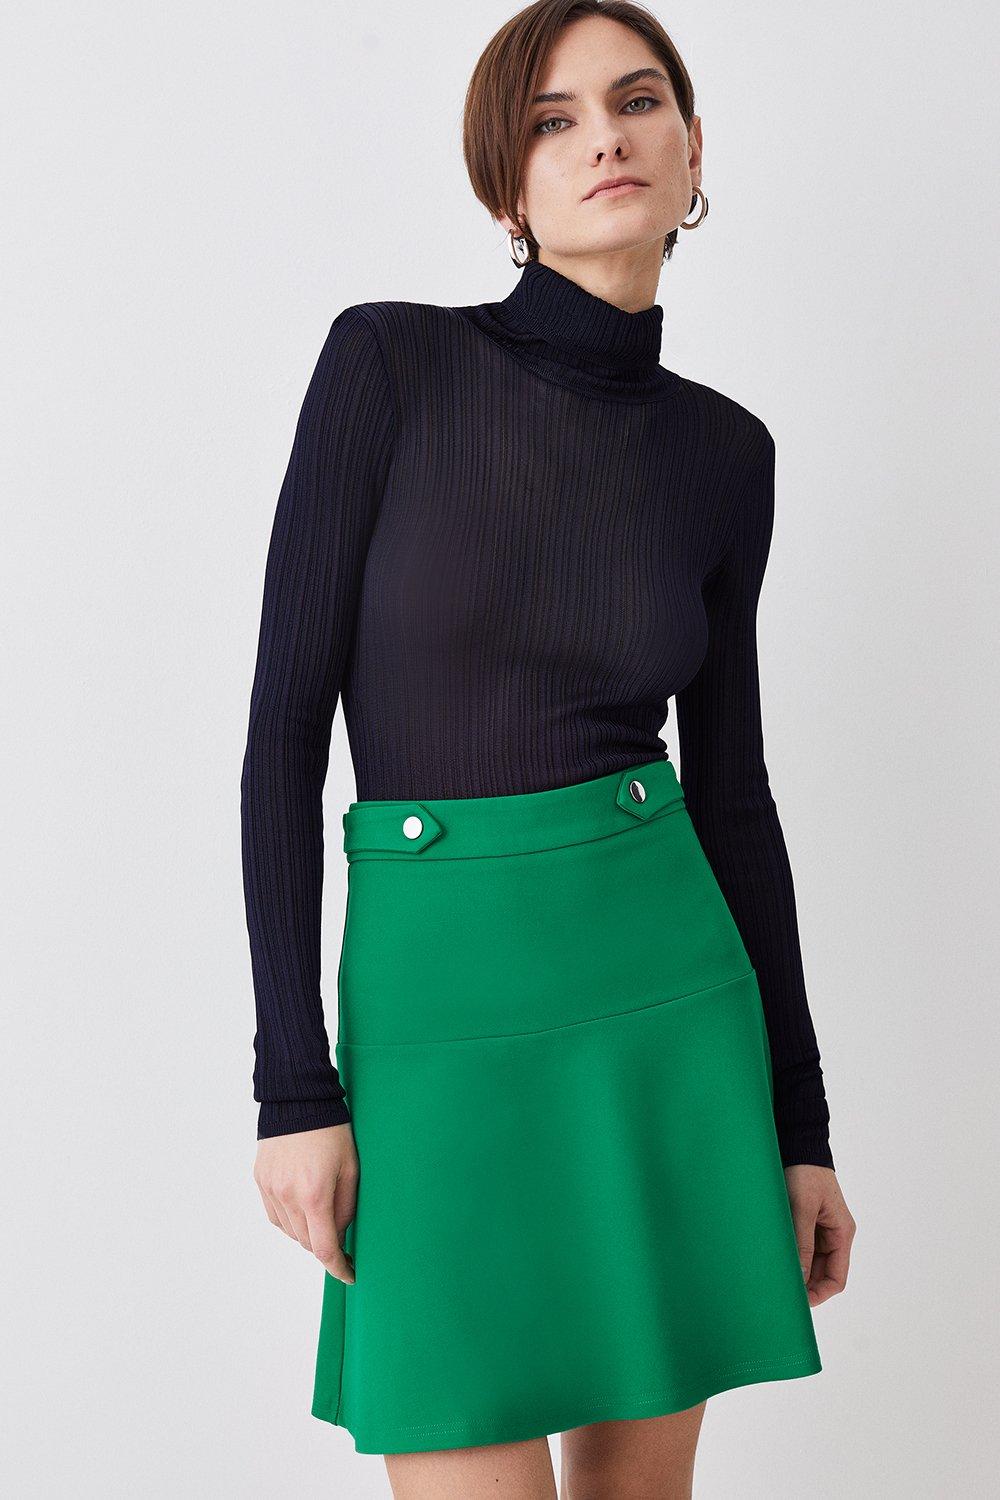 Black Pleated Skirt Gothic Skirt Micro Mini Skirt Vegan  Etsy UK  Mini  skirts Pixie skirt Mini skirt dress